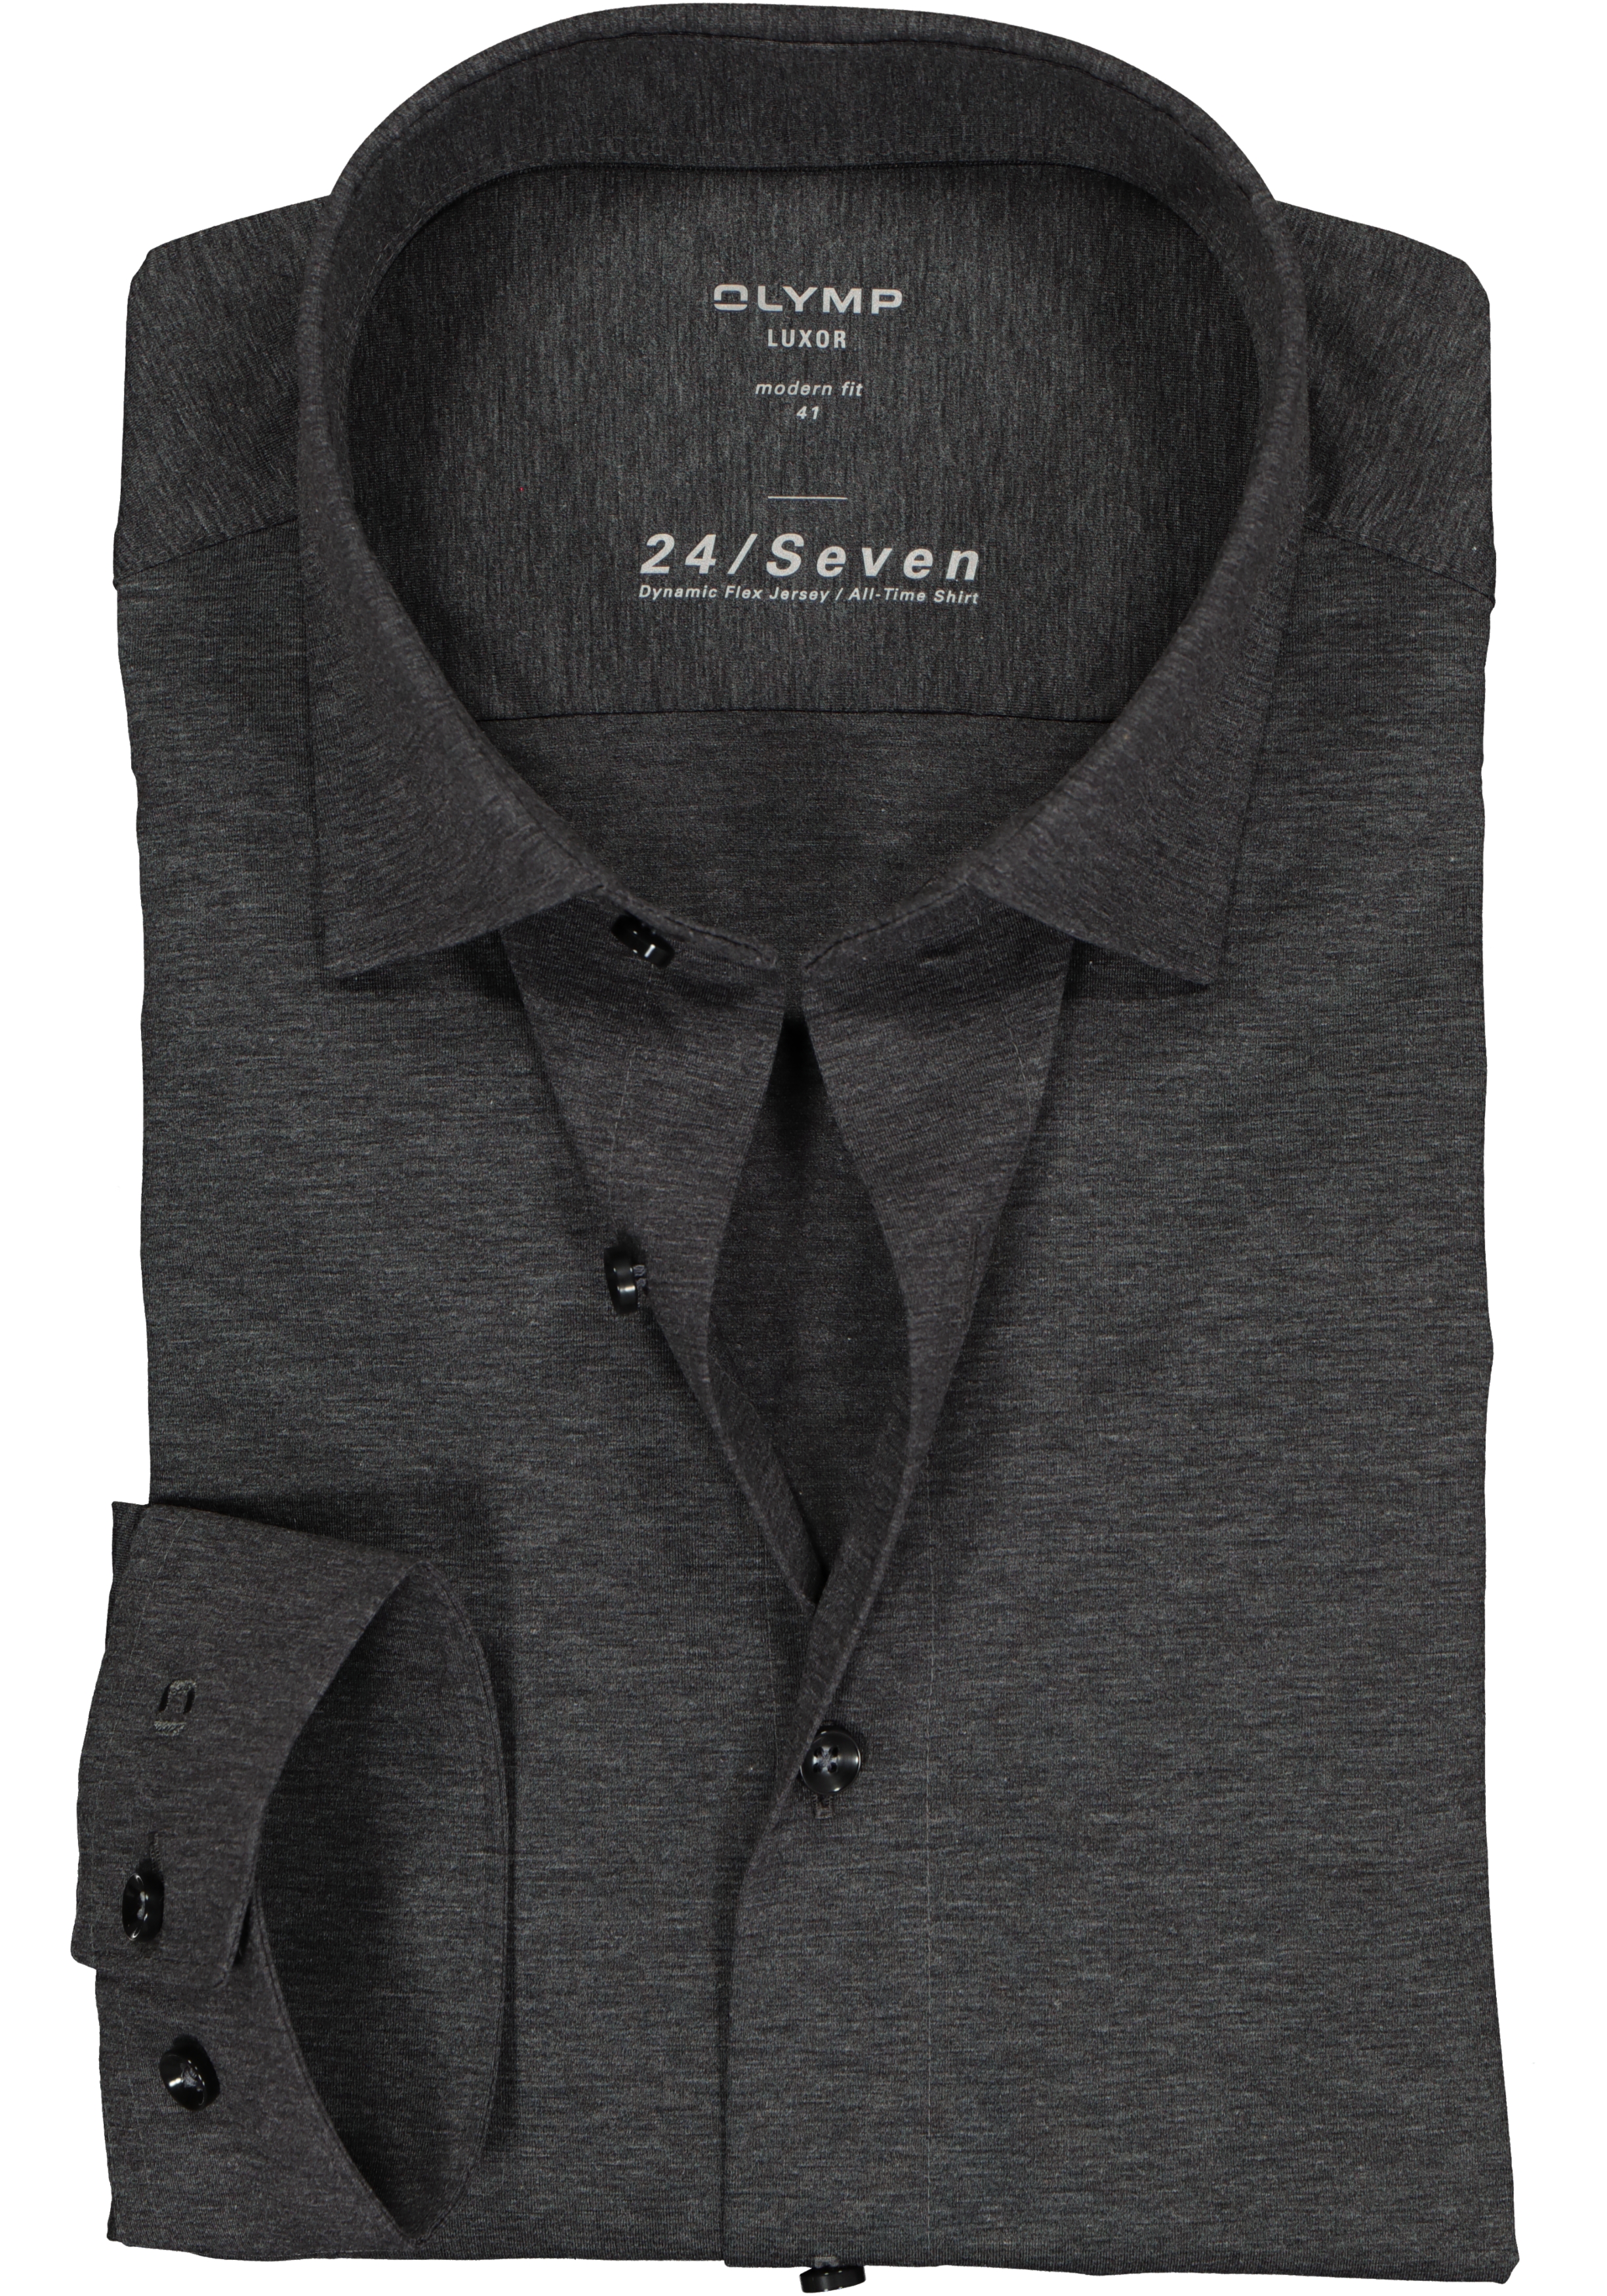 OLYMP Luxor 24/Seven modern fit overhemd, antraciet grijs tricot